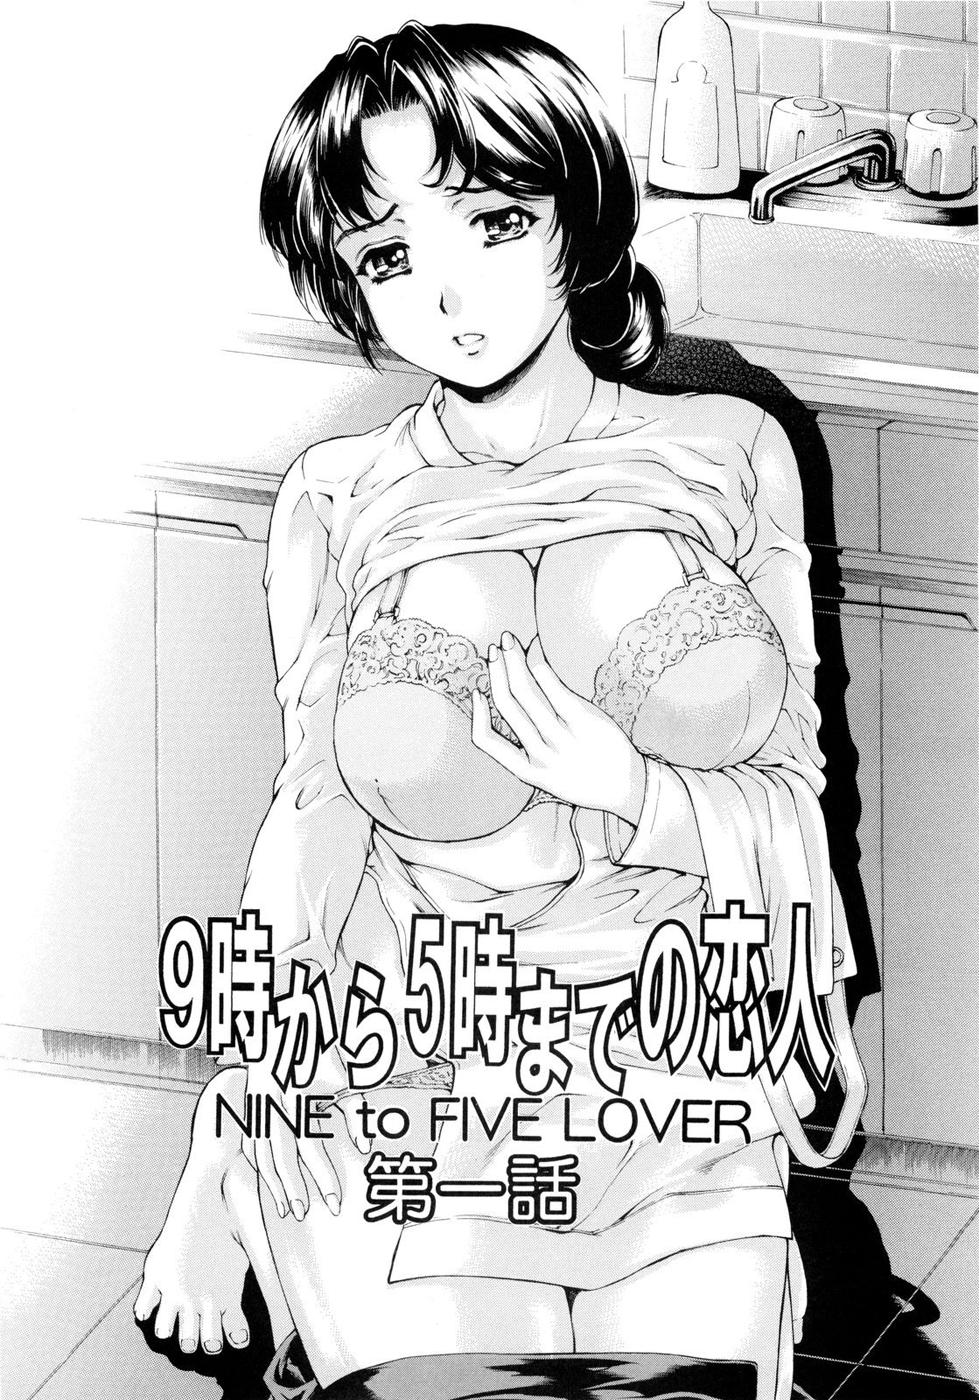 Nine to Five Lover Vol. 1 6